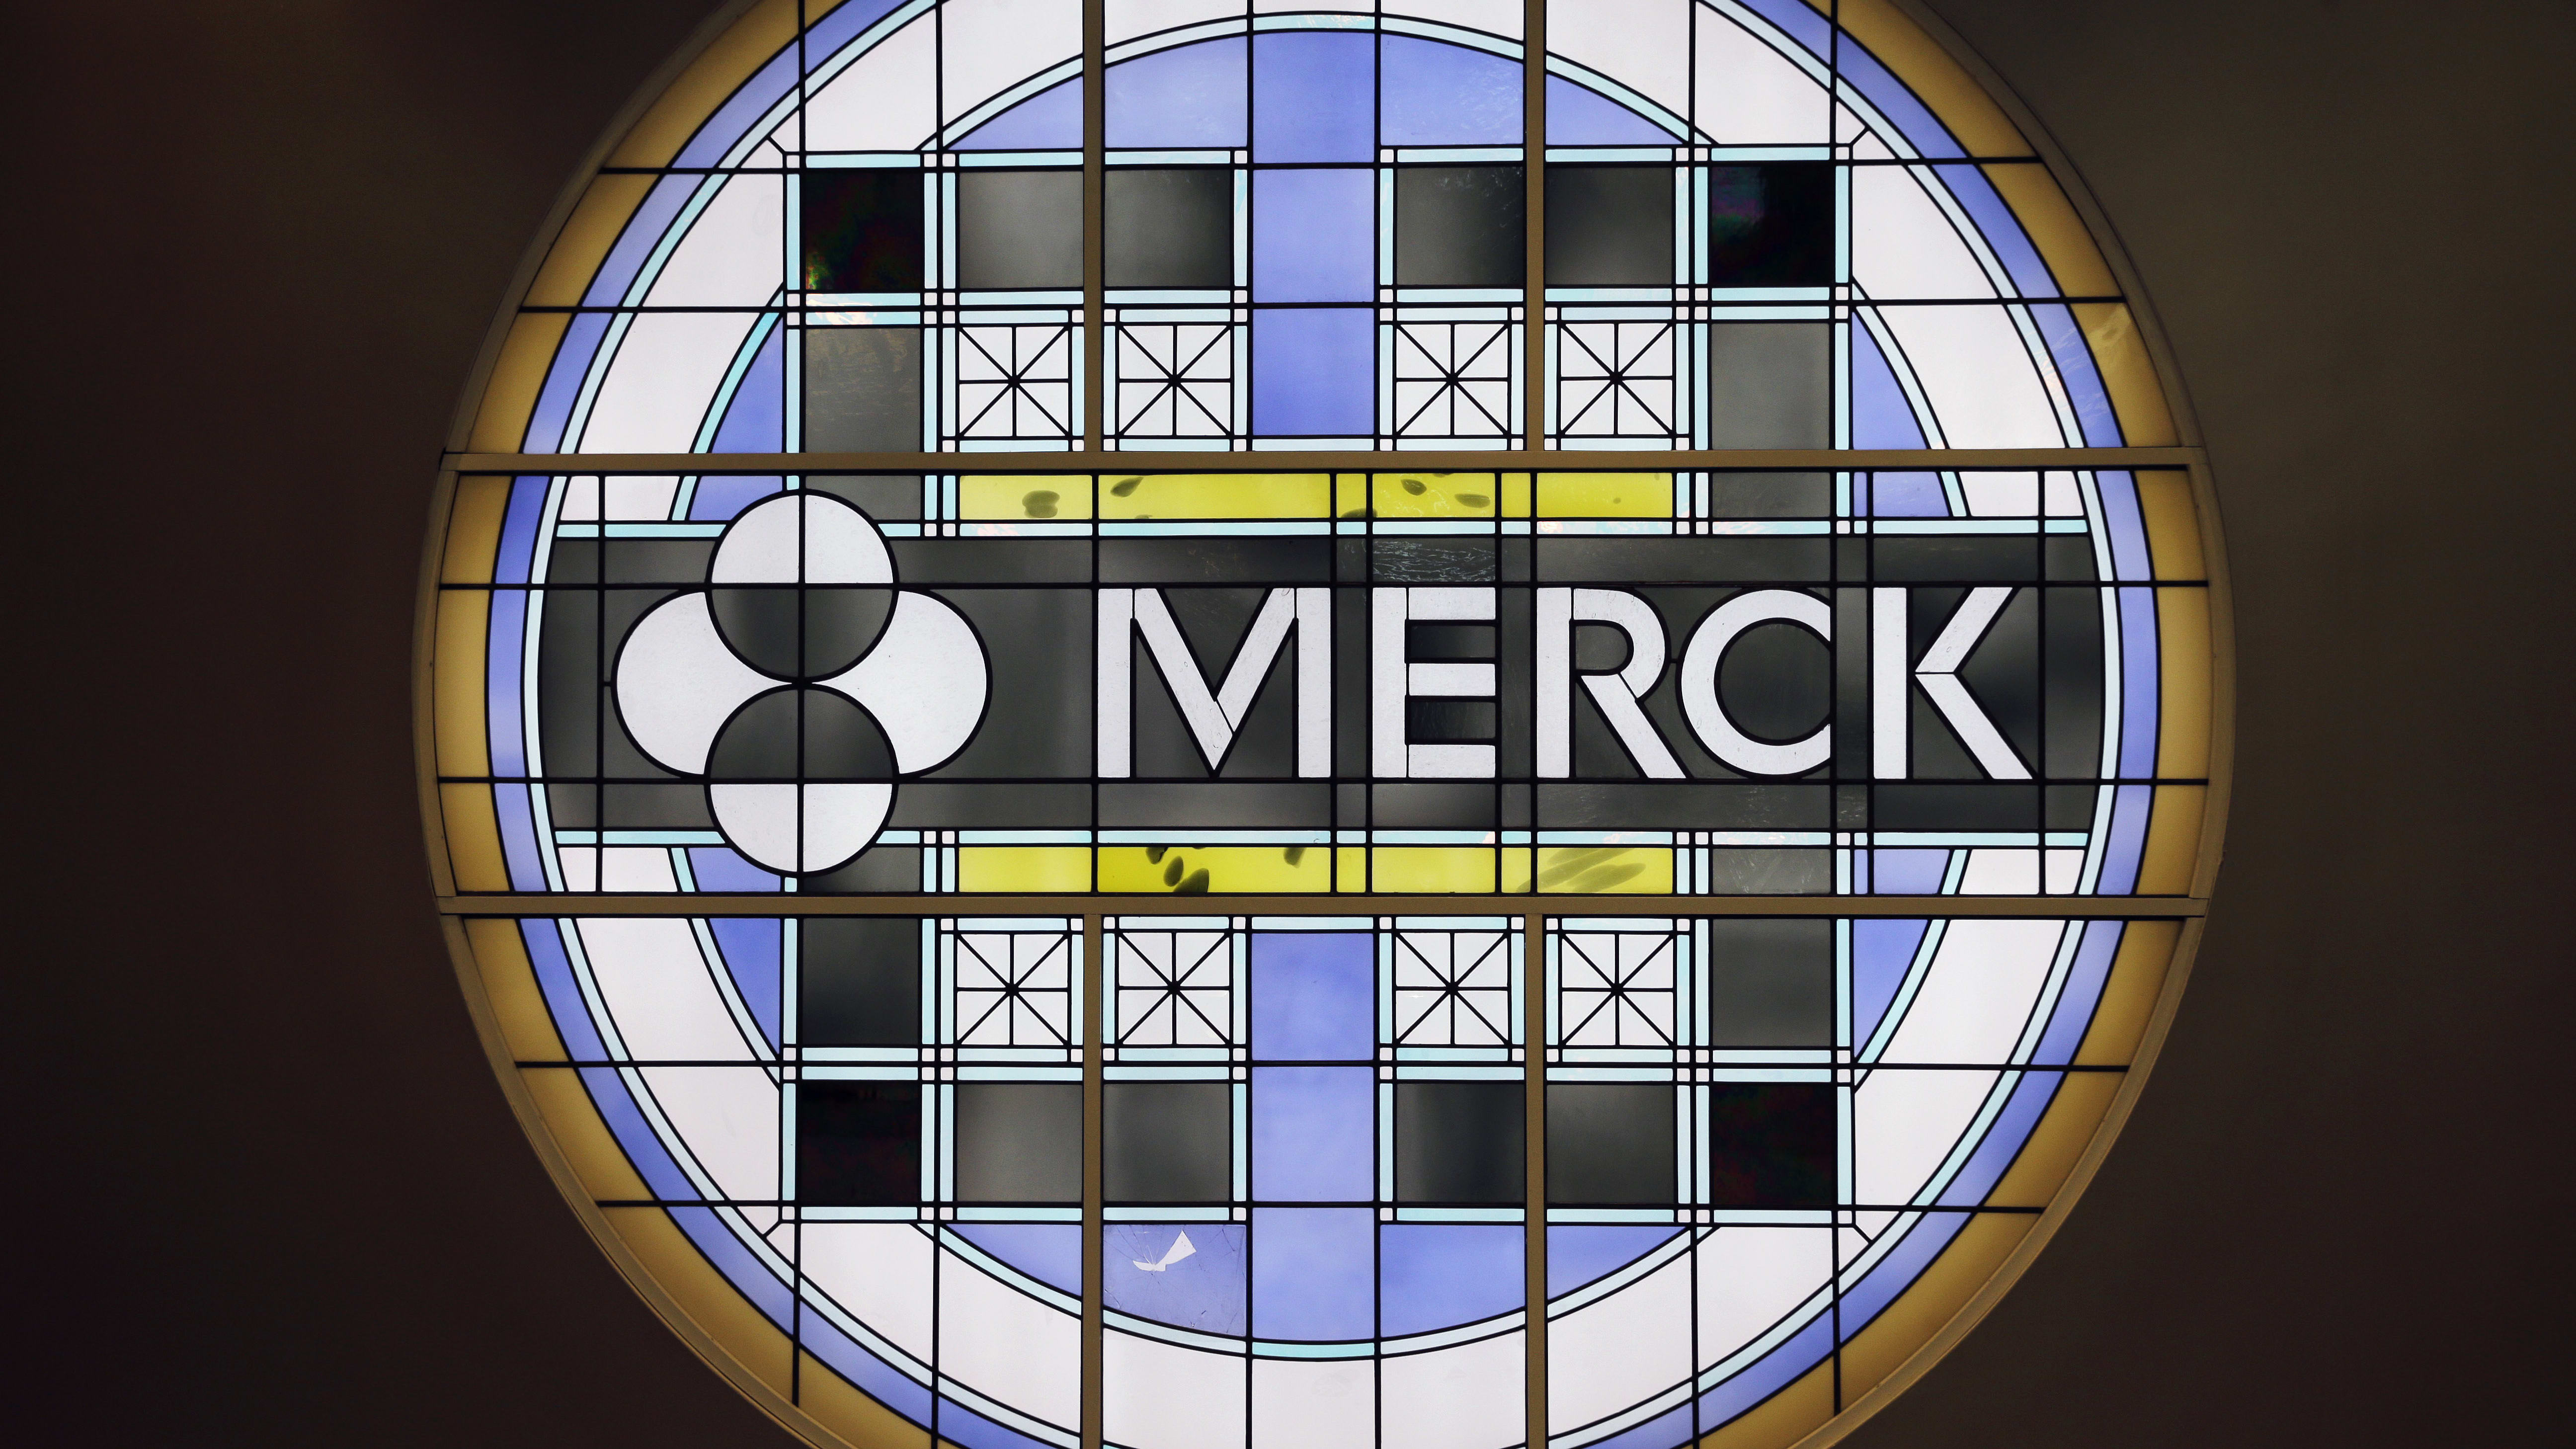 The Merck logo.